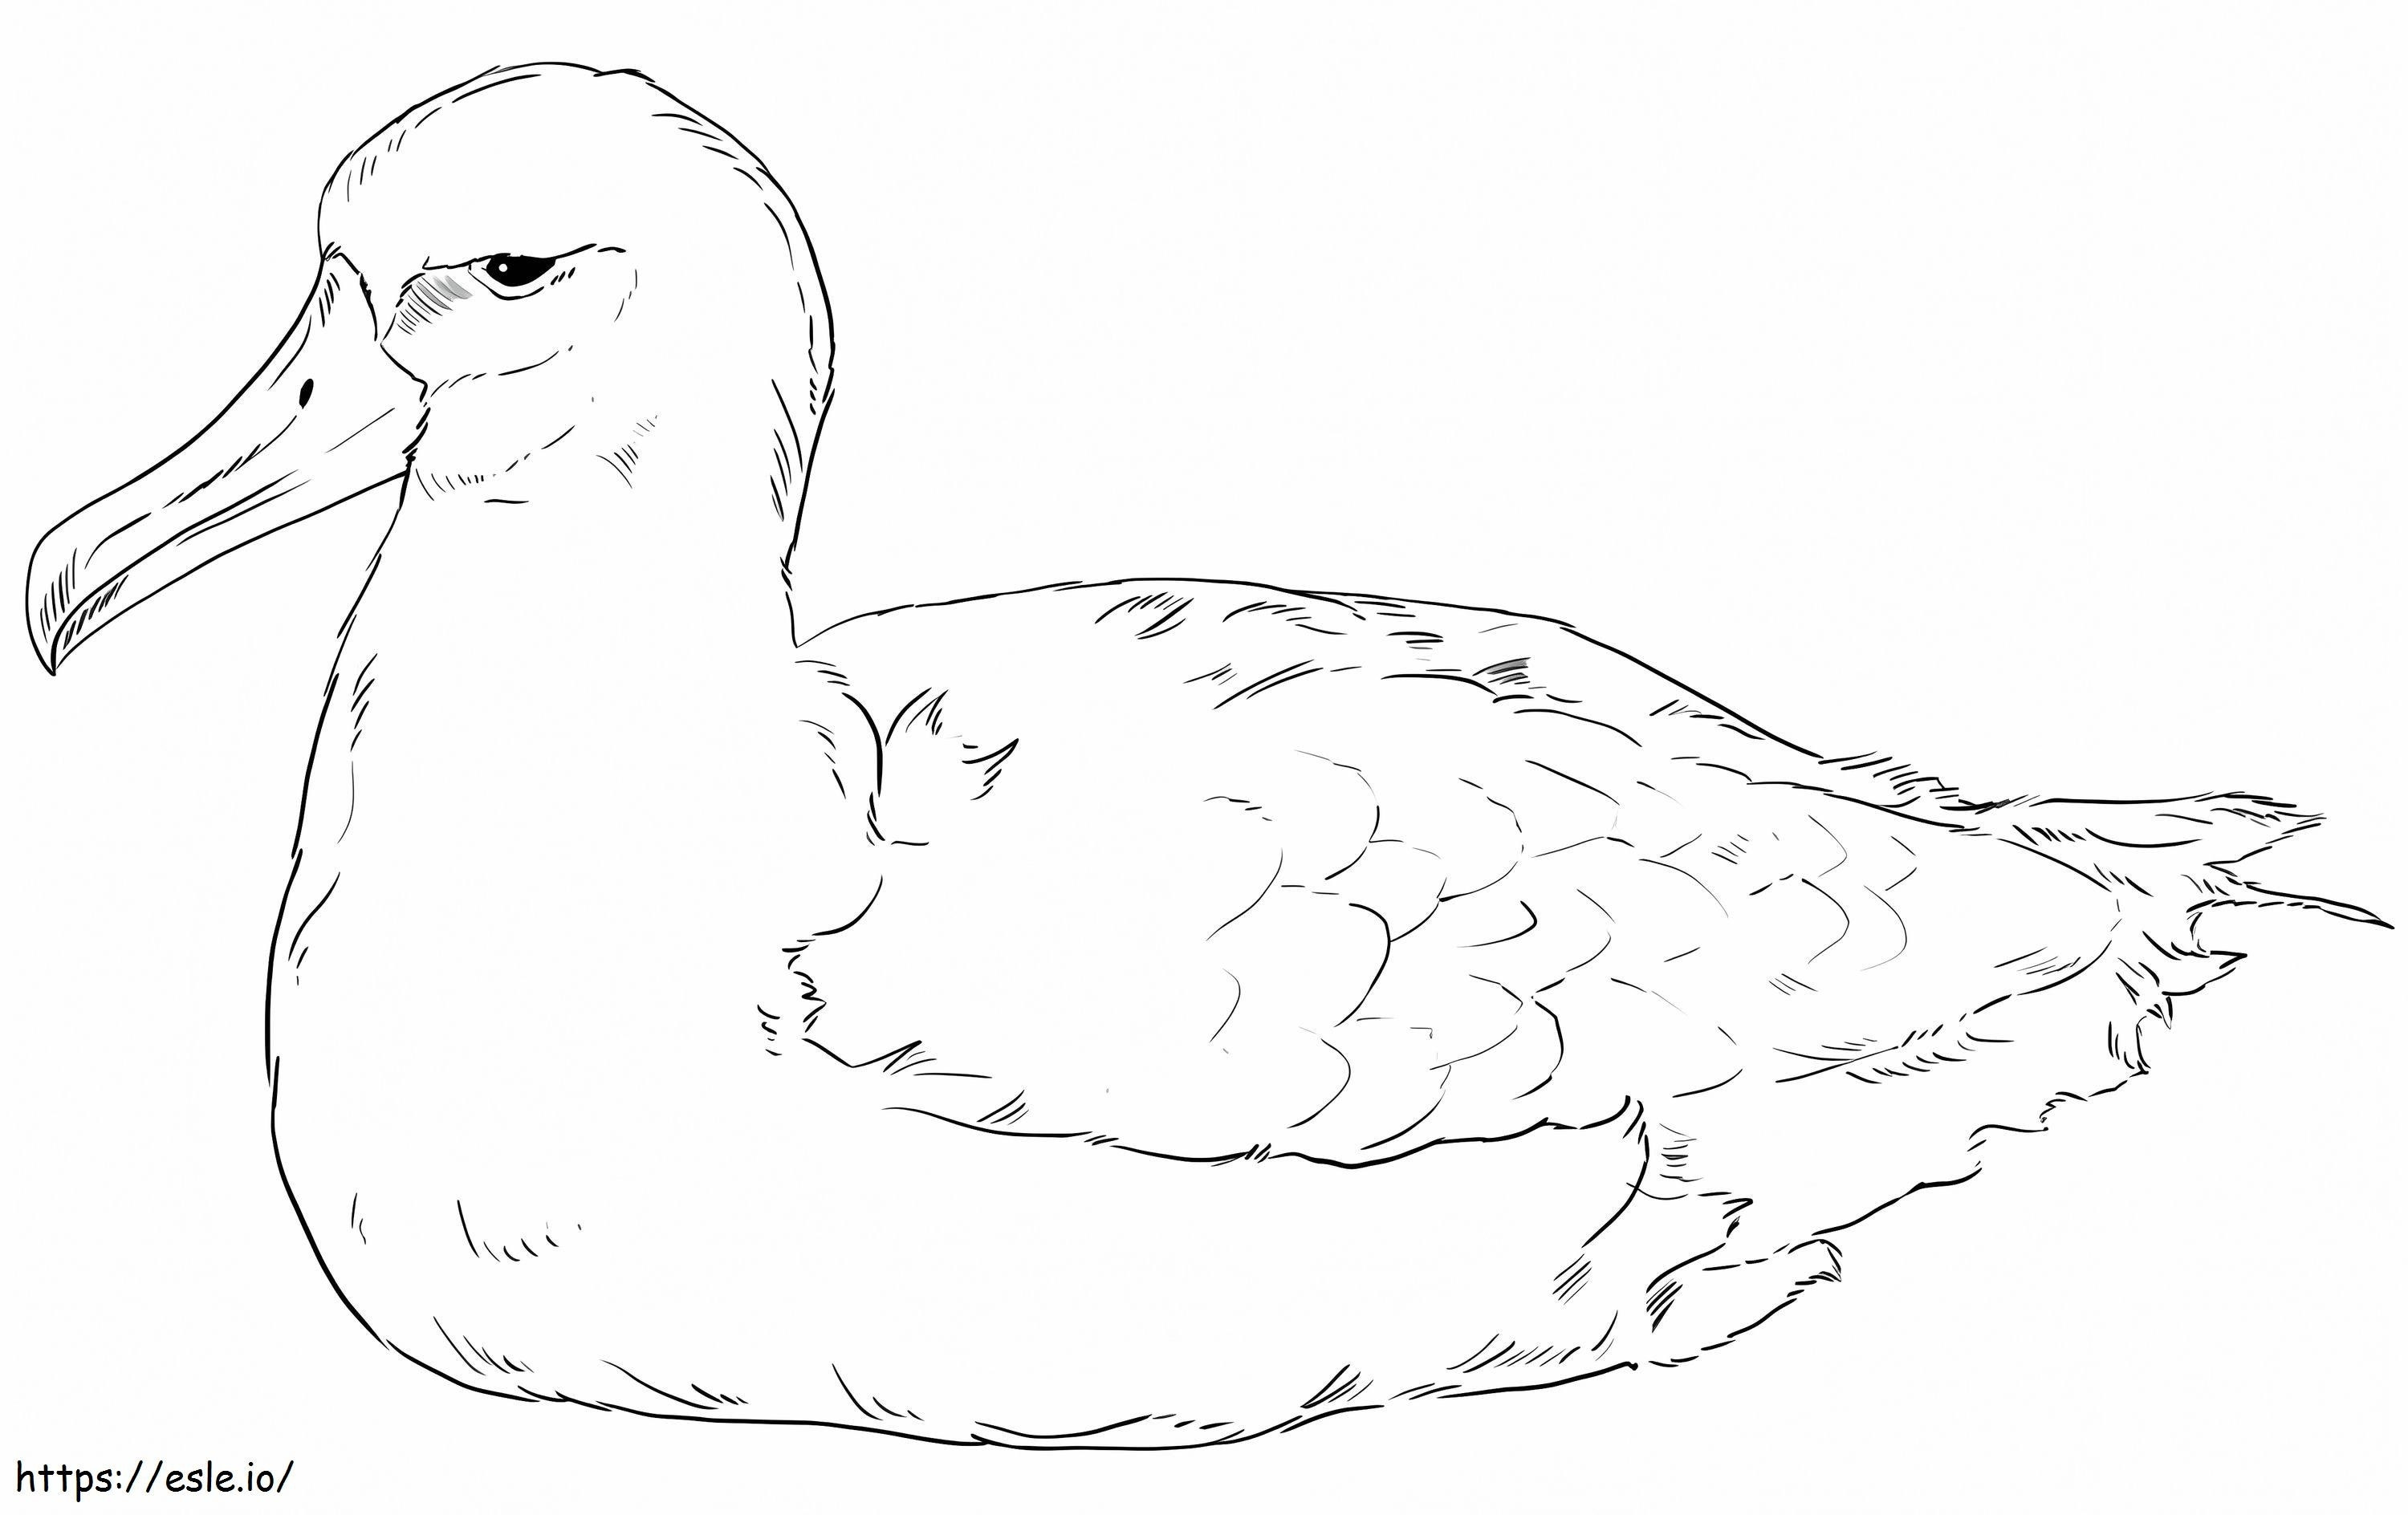 Laysan Albatros ausmalbilder